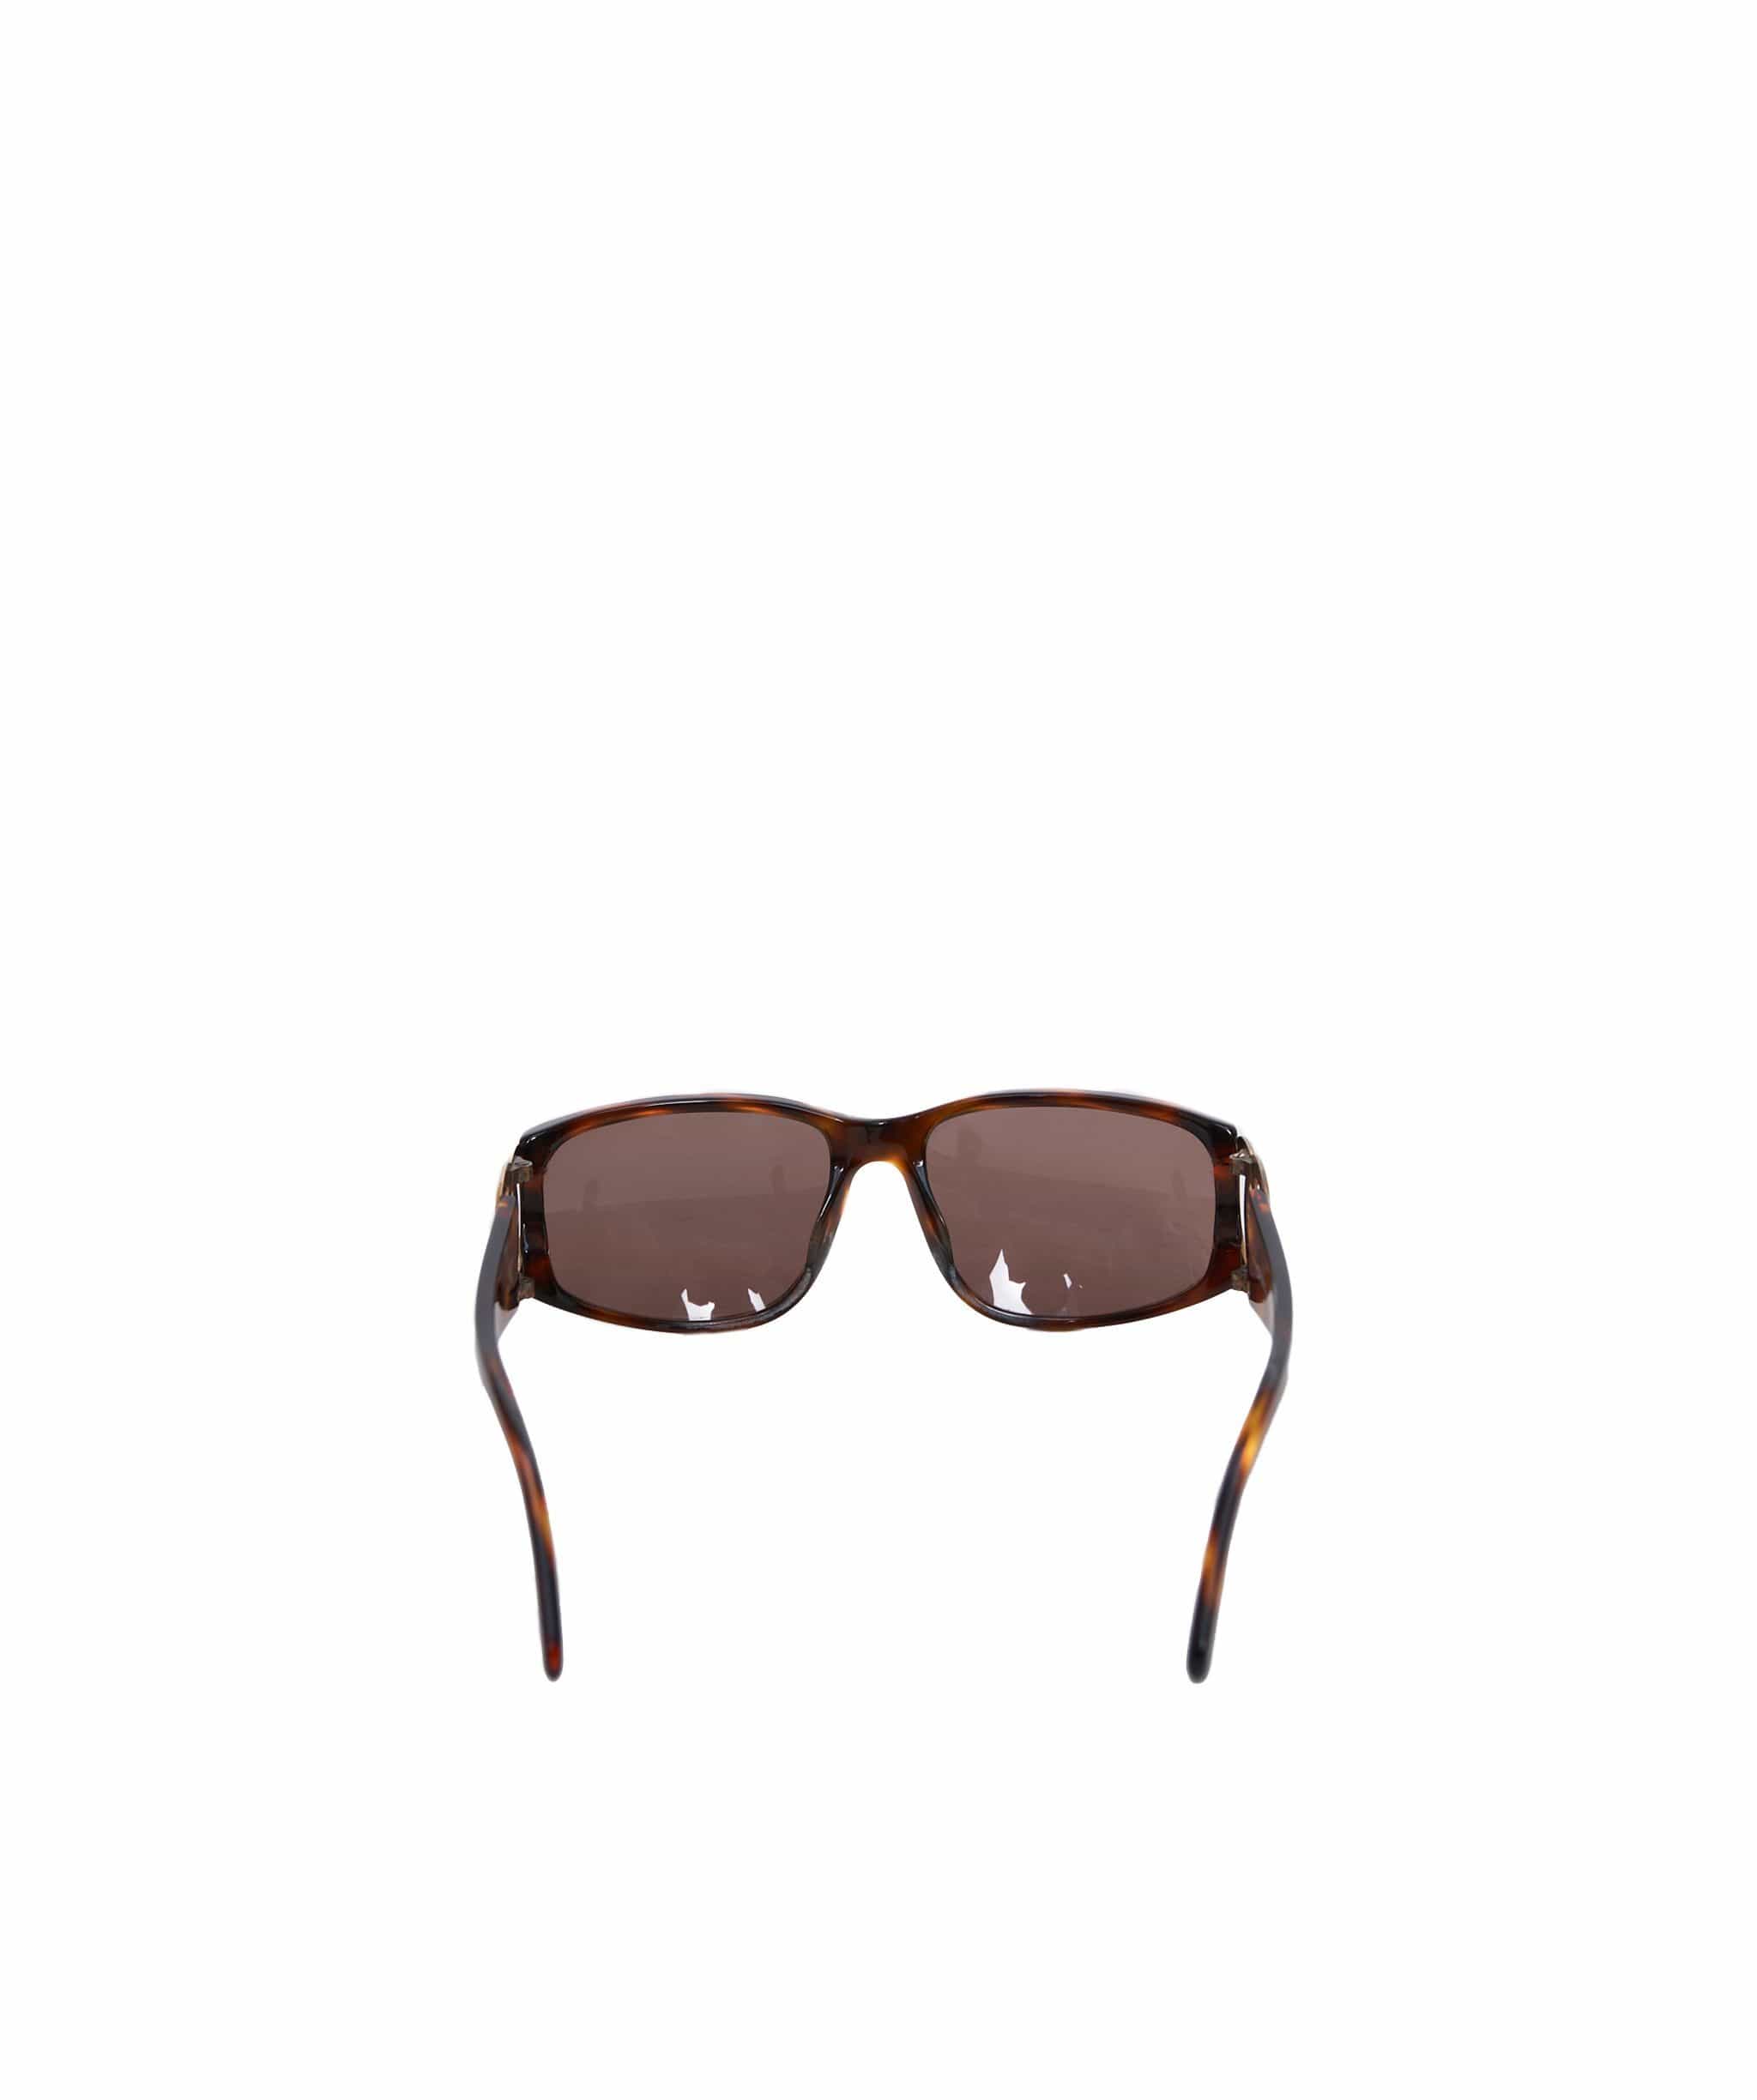 Chanel Chanel CC Vintage Brown Sunglasses AGL1128